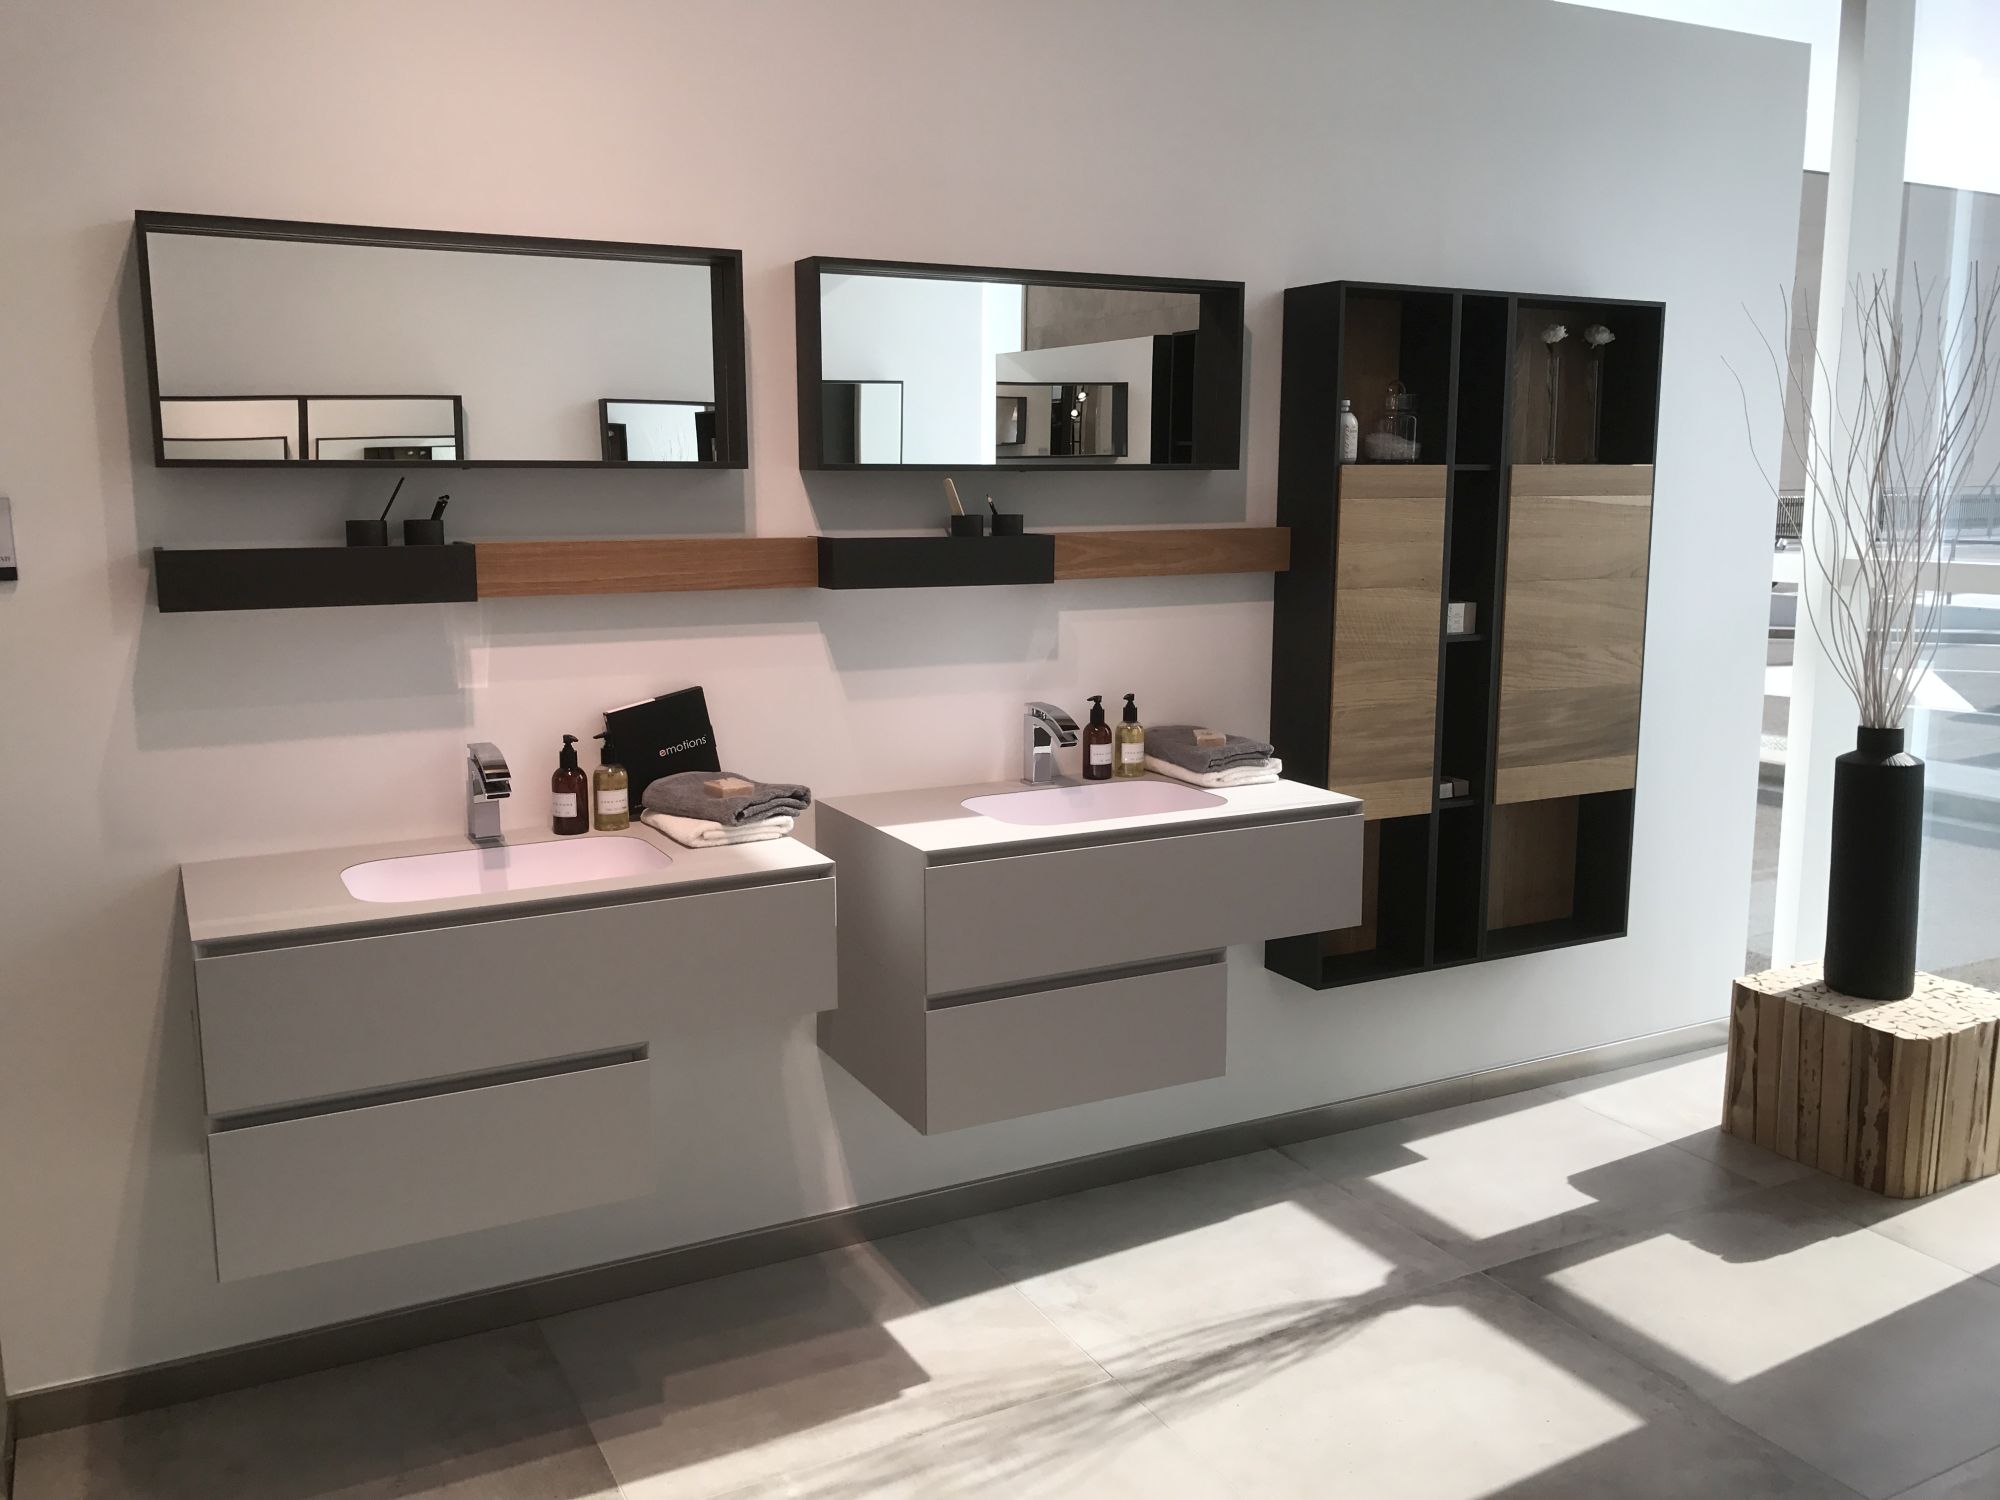 Sleek contrasting bathroom furniture - GamaDecor